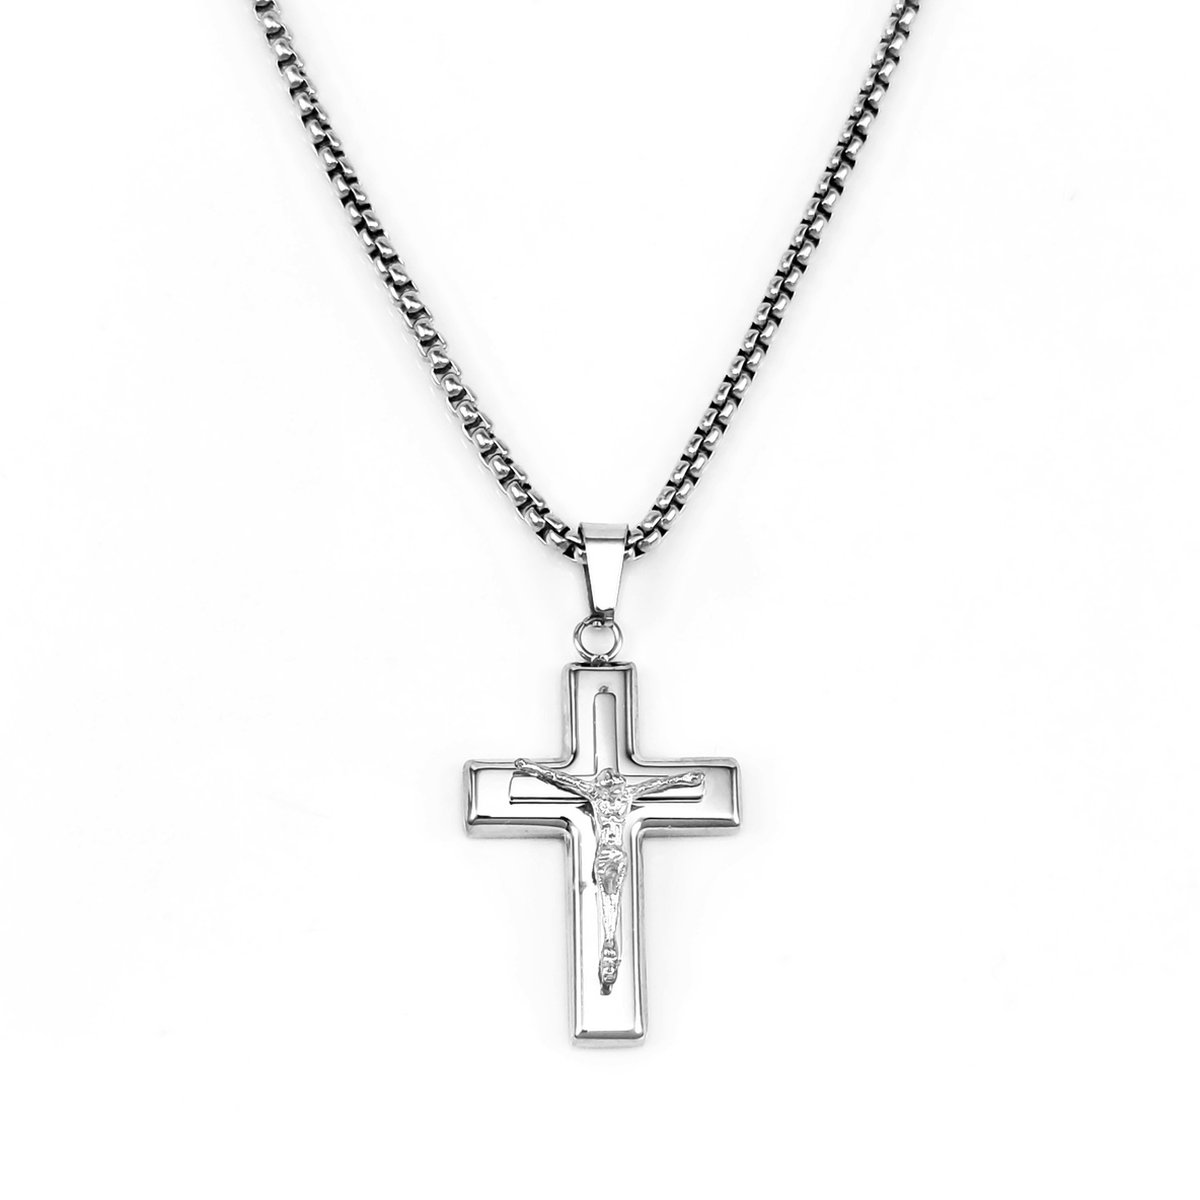 60cmx 3mm Ketting + Kruis met Jezus Unisex - RVS - Religieus Christus Kruis Hanger